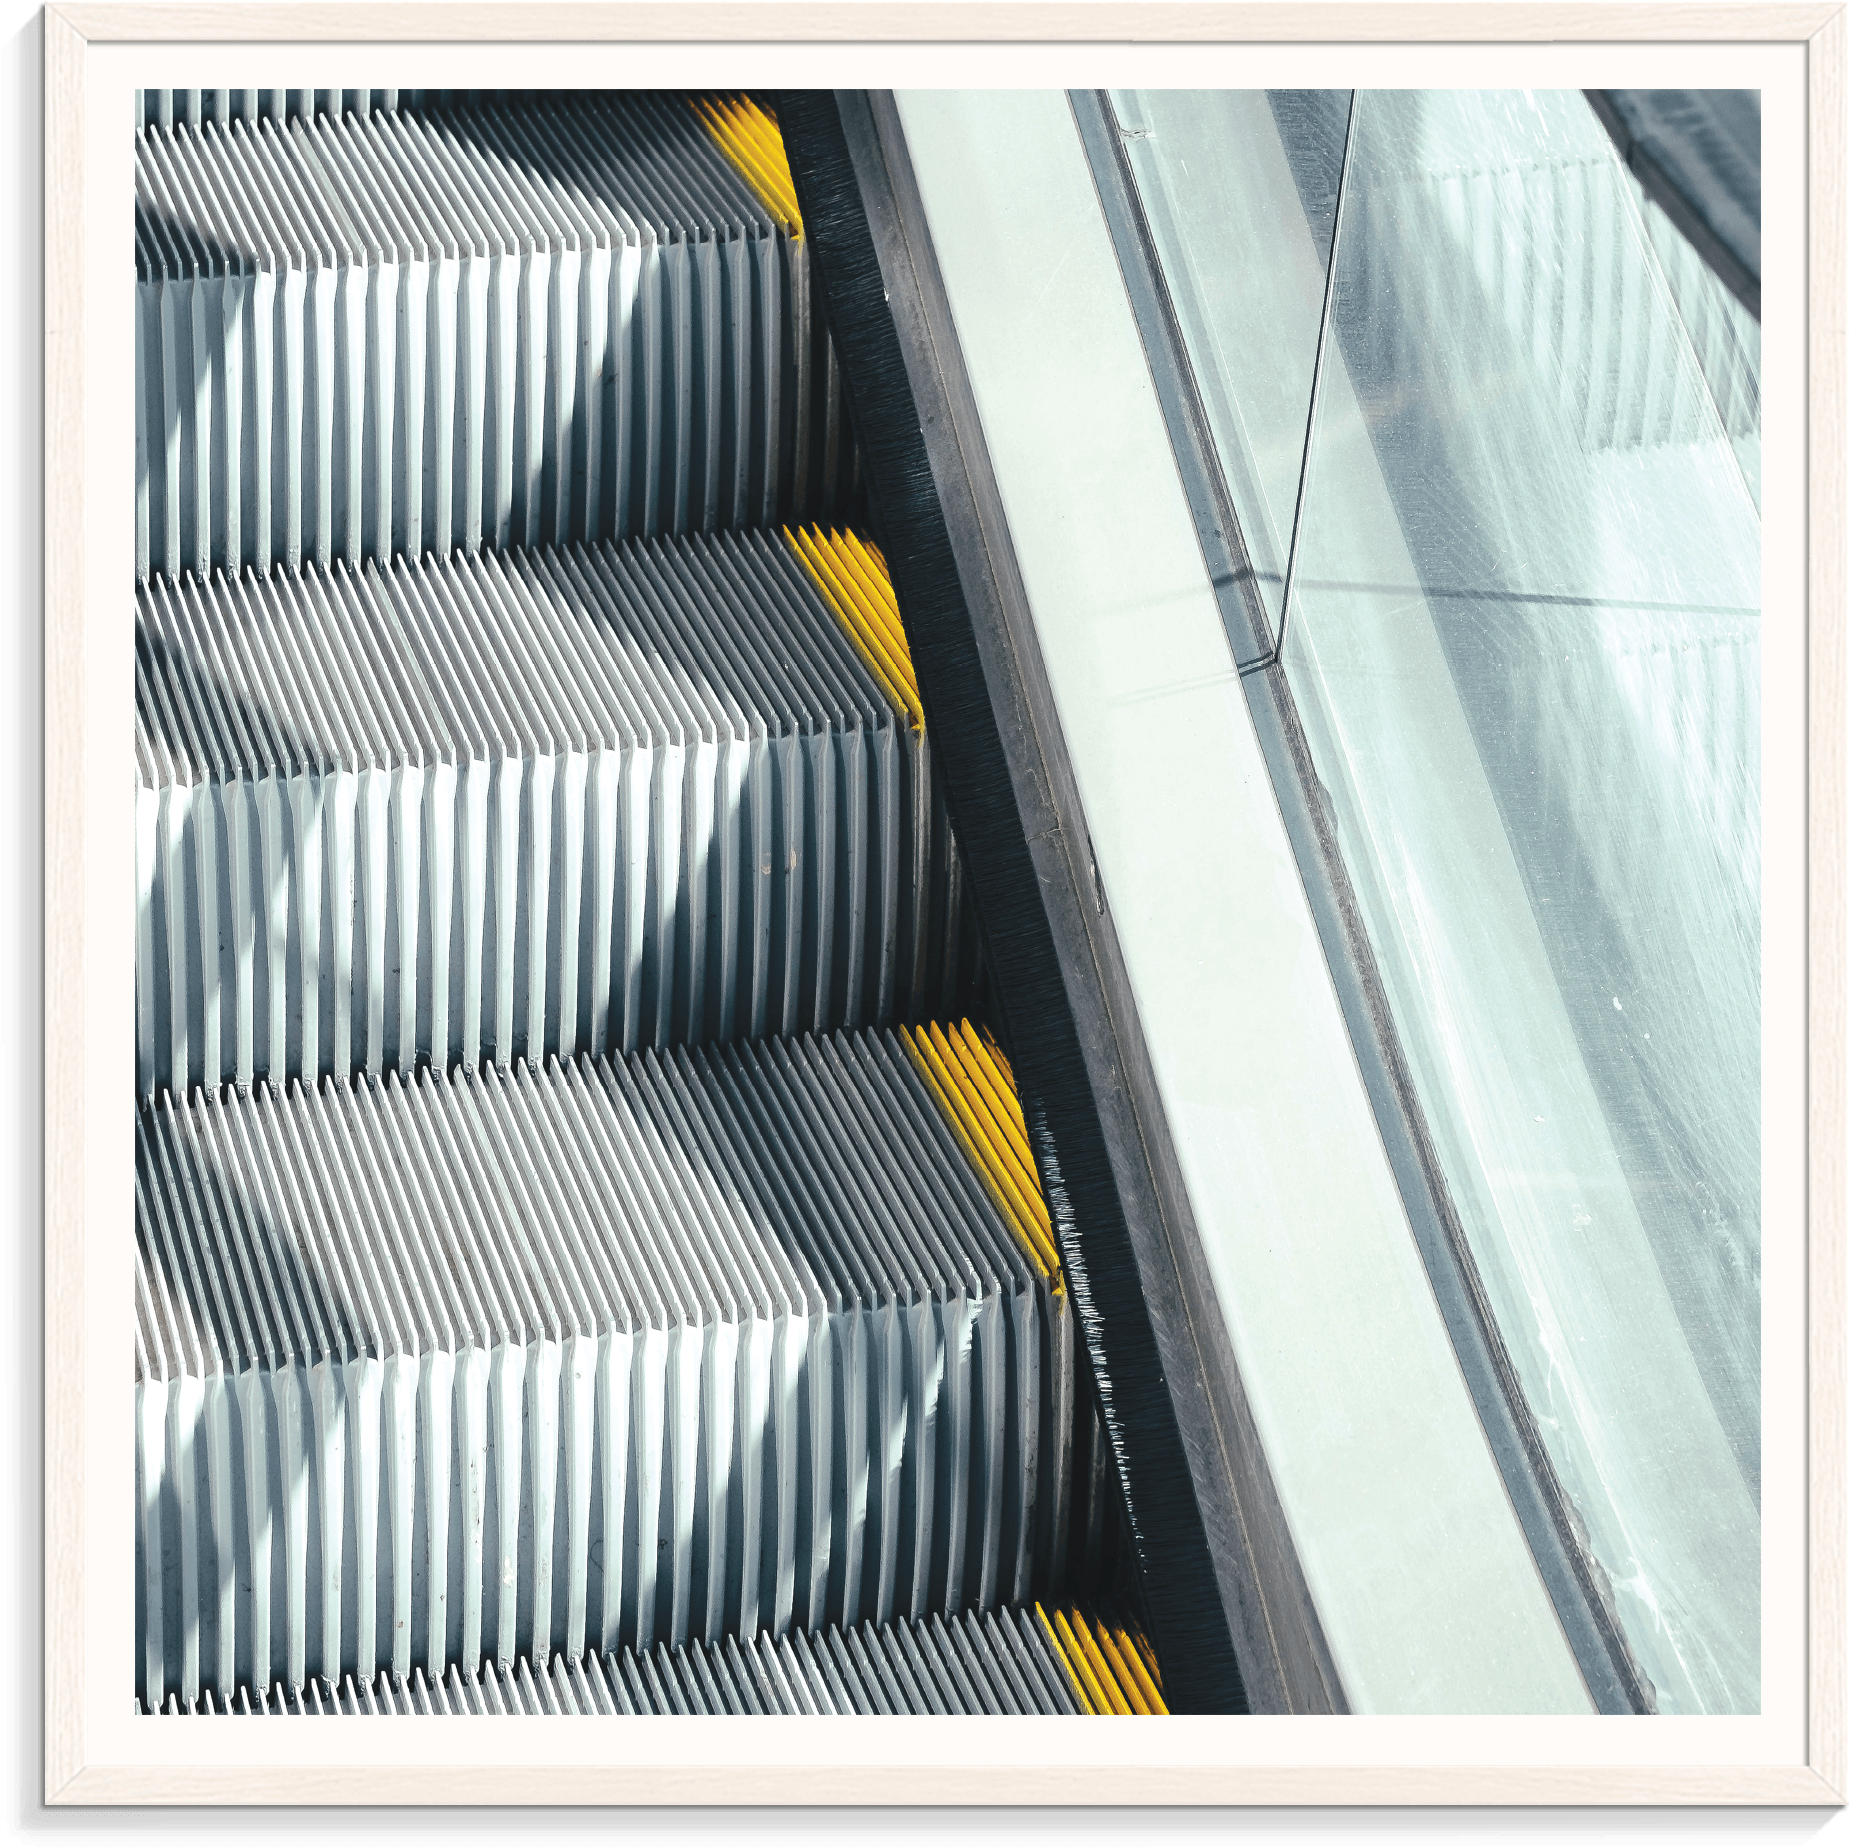 A Close Up Of An Escalator